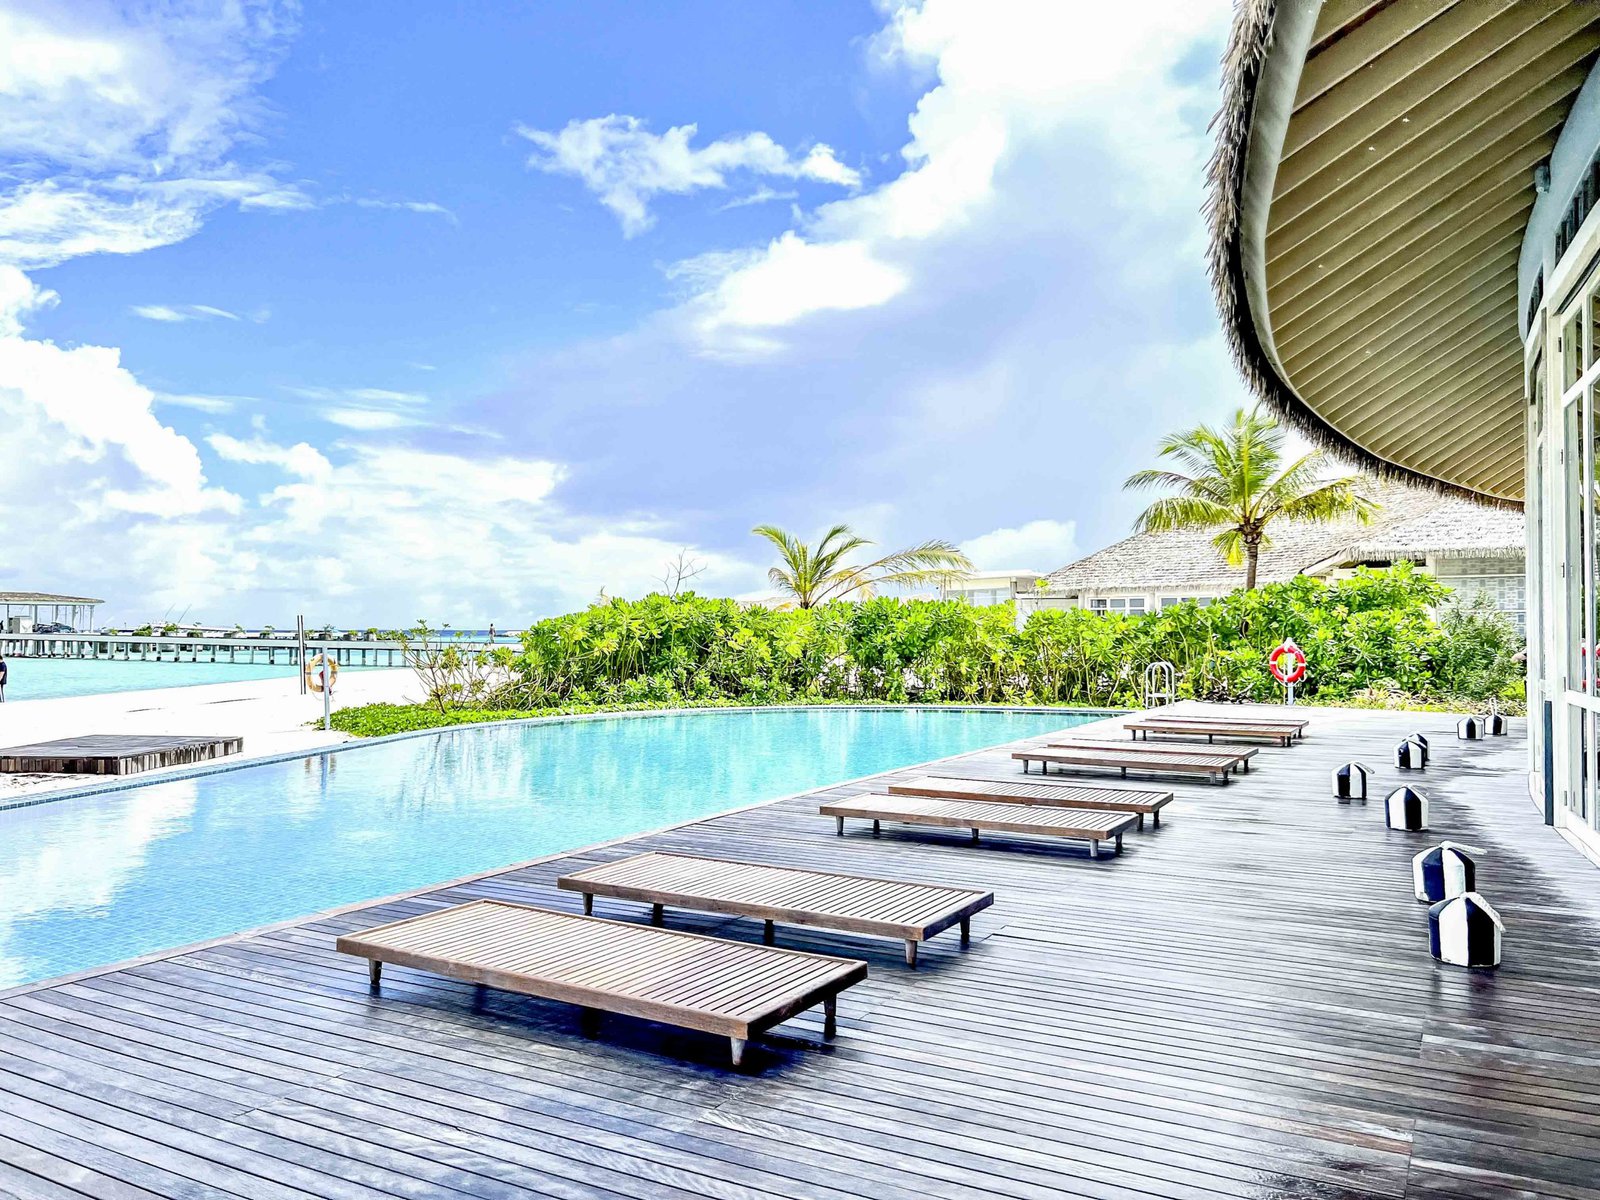 Le Meridien Maldives Resort Spa Main Pool 4137